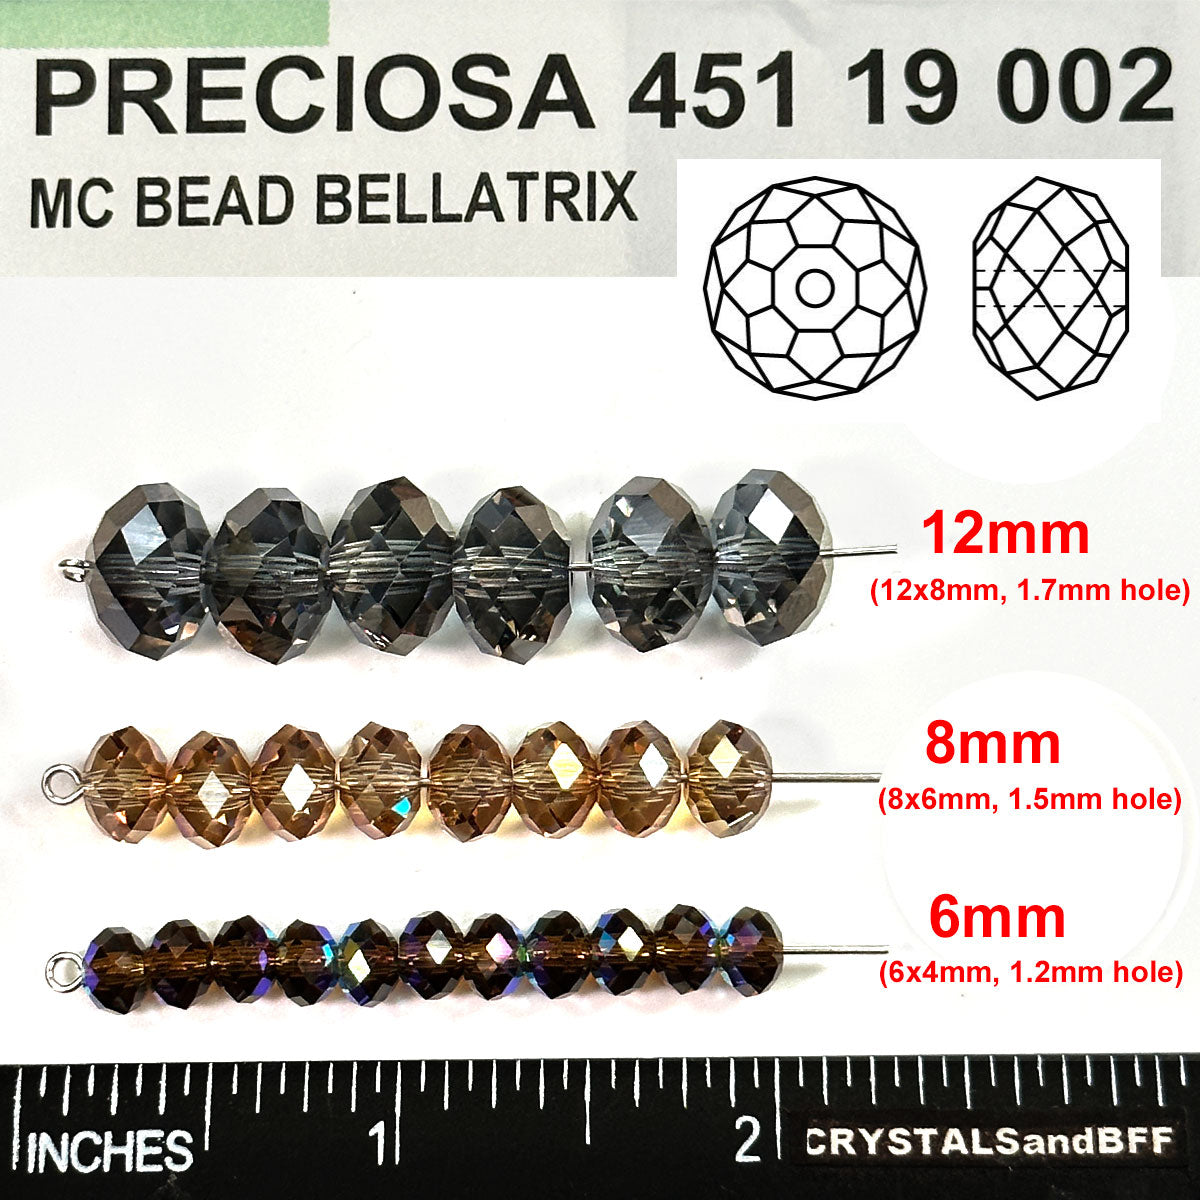 Crystal Velvet coated, Czech Machine Cut Bellatrix Crystal Beads, Preciosa 451-19-002, 6mm, 8mm, 12mm, spacer beads, #5040 Briolette cut